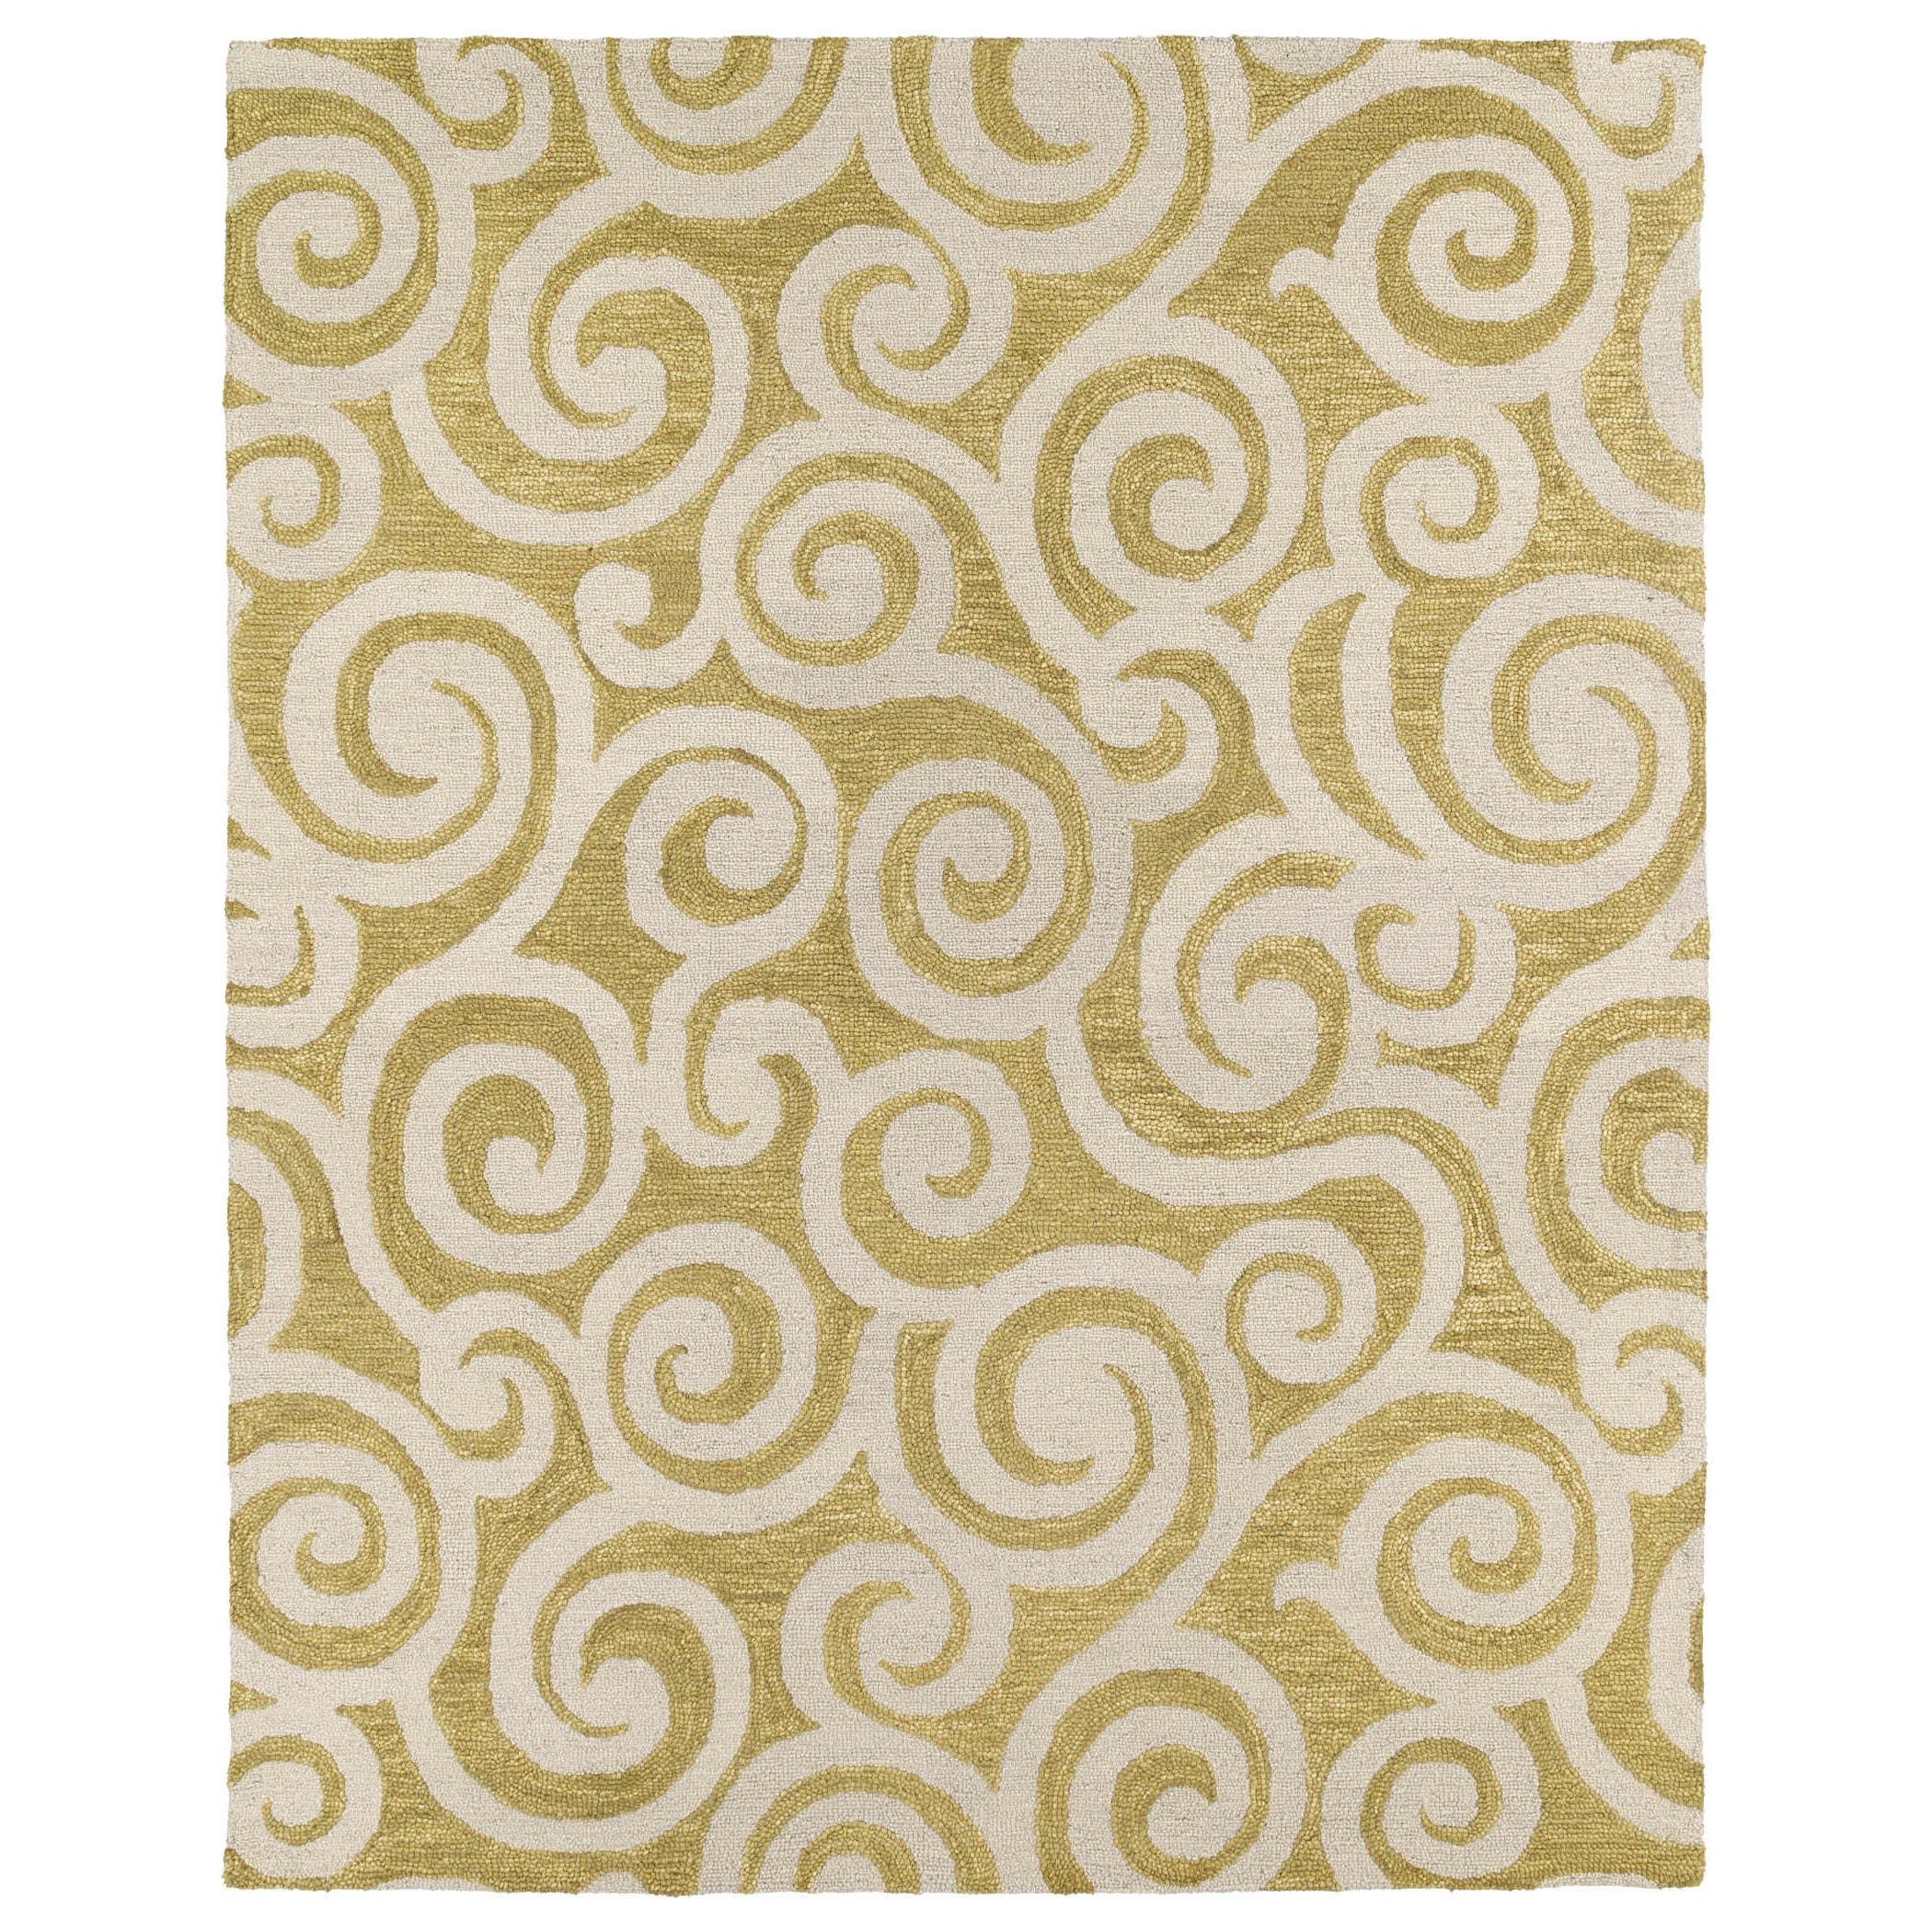 Kaleen Hand tufted Zoe Gold Scroll Wool Rug (8x10) Beige Size 8 x 10